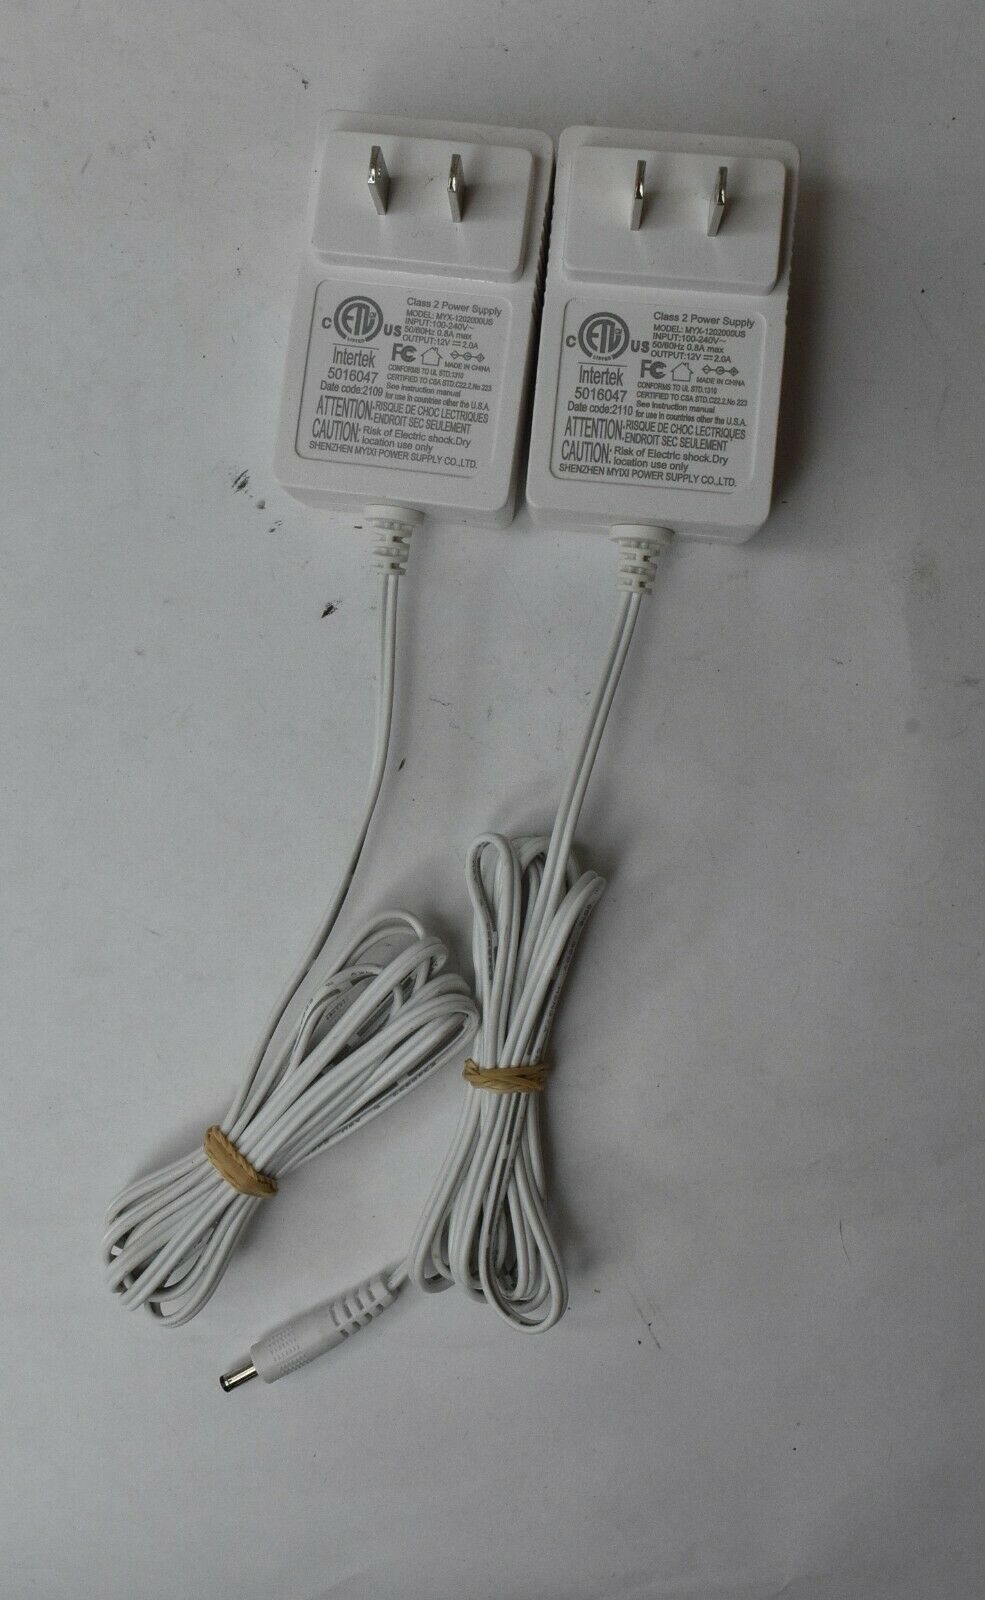 Lot of 2 Shenzhen Myiki Power Supply Adapter Unit MYX-1202000US 12V 2A Type: Adapter Output Voltage: 12 V Brand: